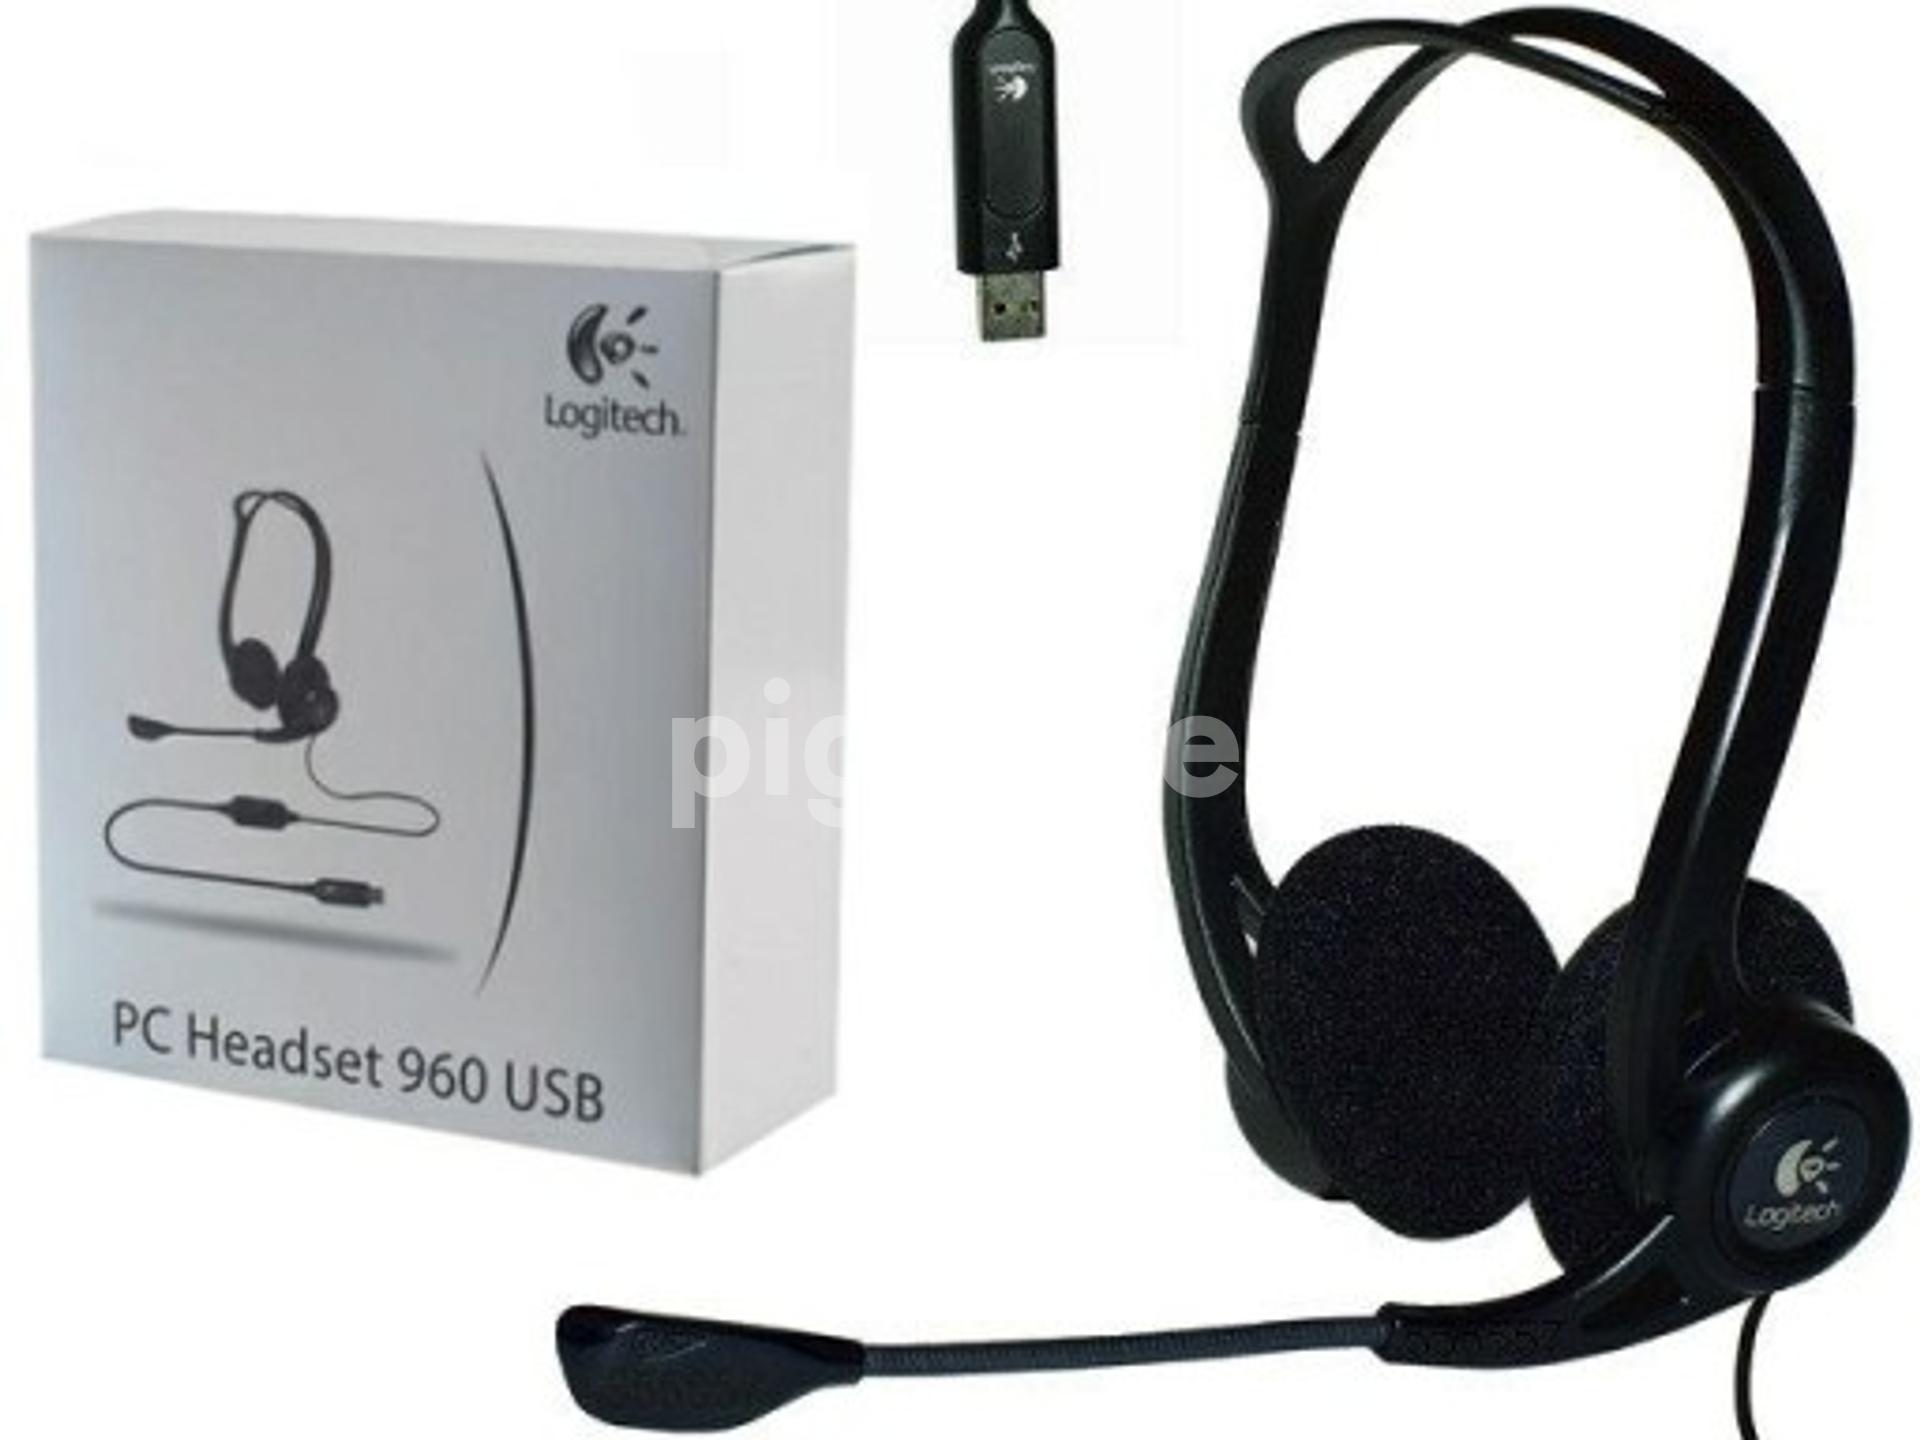 Logitech headset 960. Logitech 960 USB Headset. Наушники Logitech Headset 960. Гарнитура логитеч 960. Гарнитура Logitech PC 960 stereo USB (981-000100).